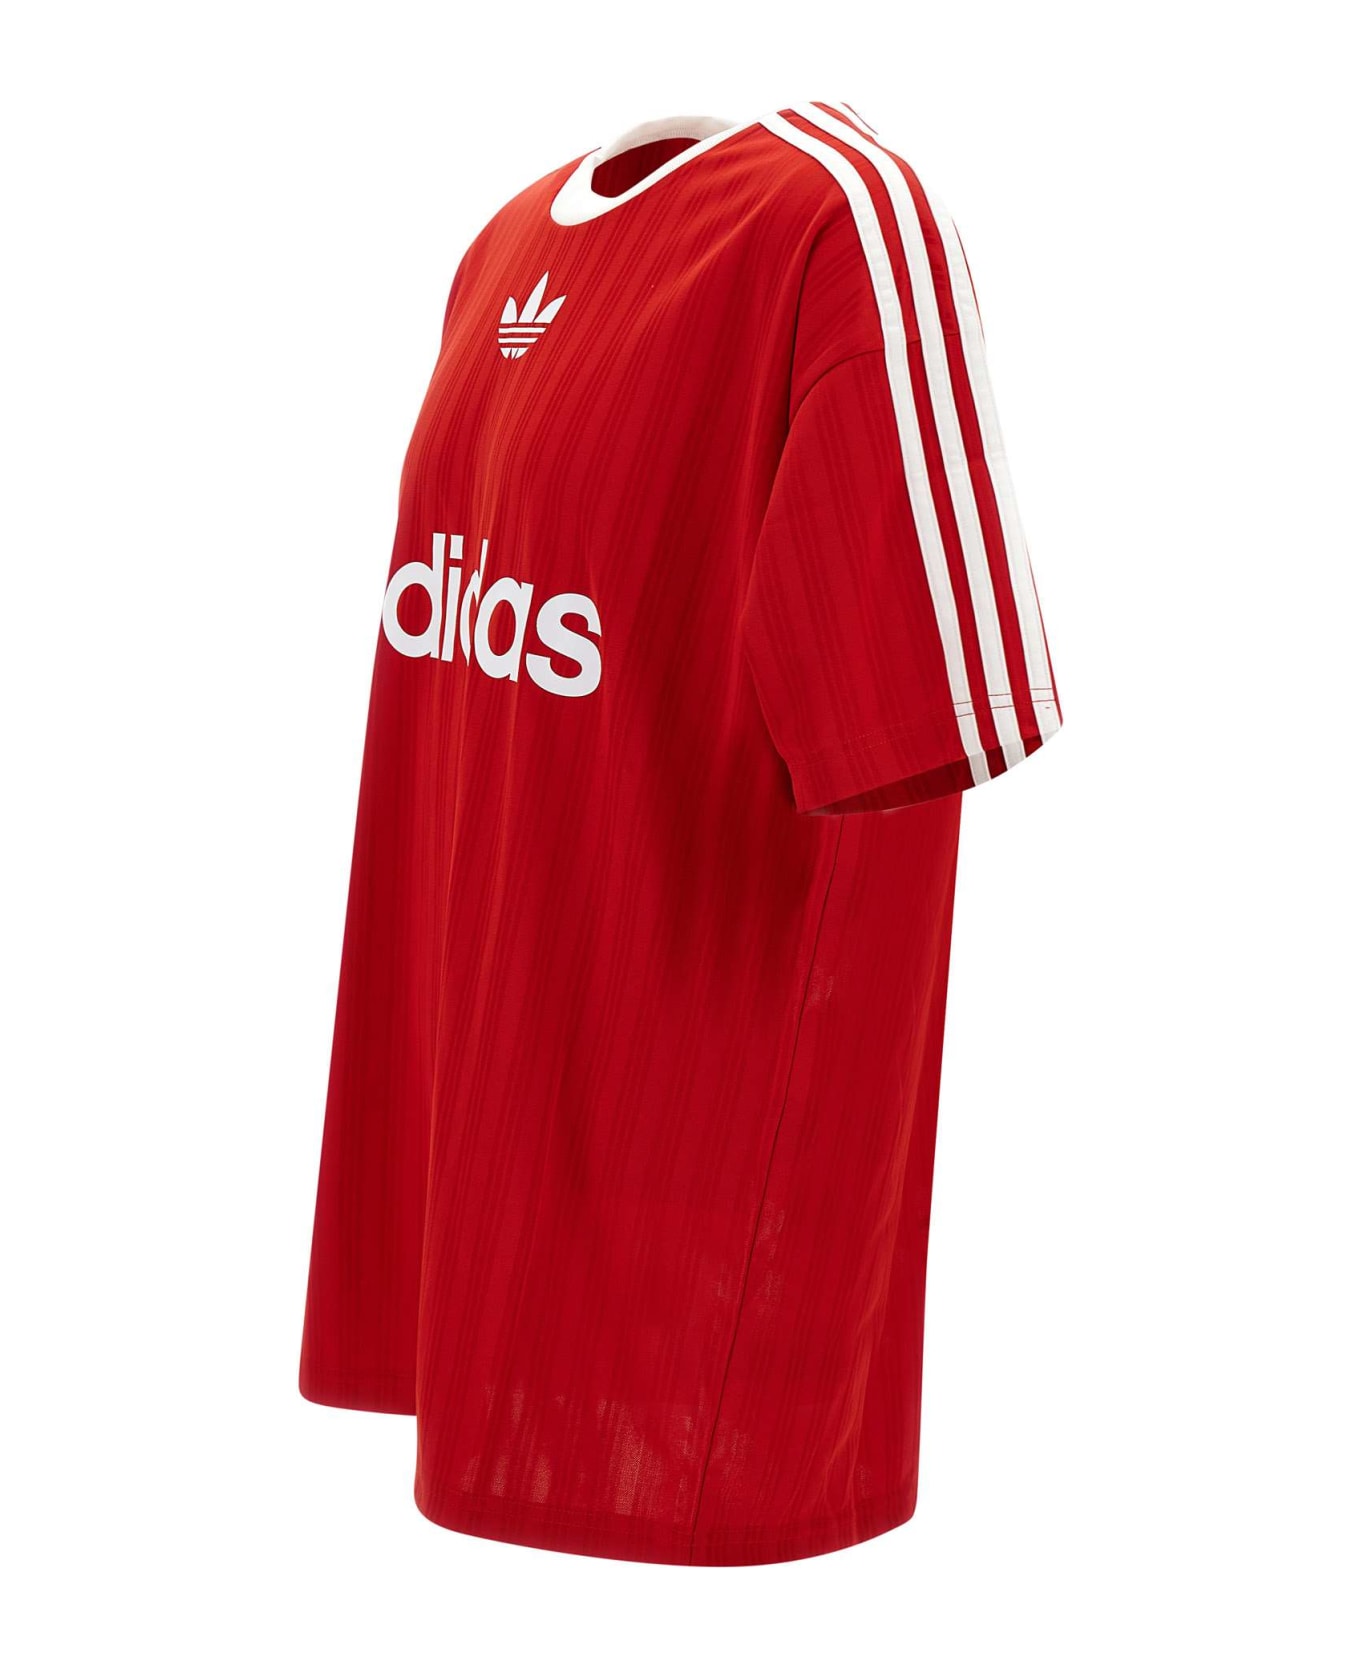 Adidas "adicolor" Jacquard Fabric T-shirt - RED